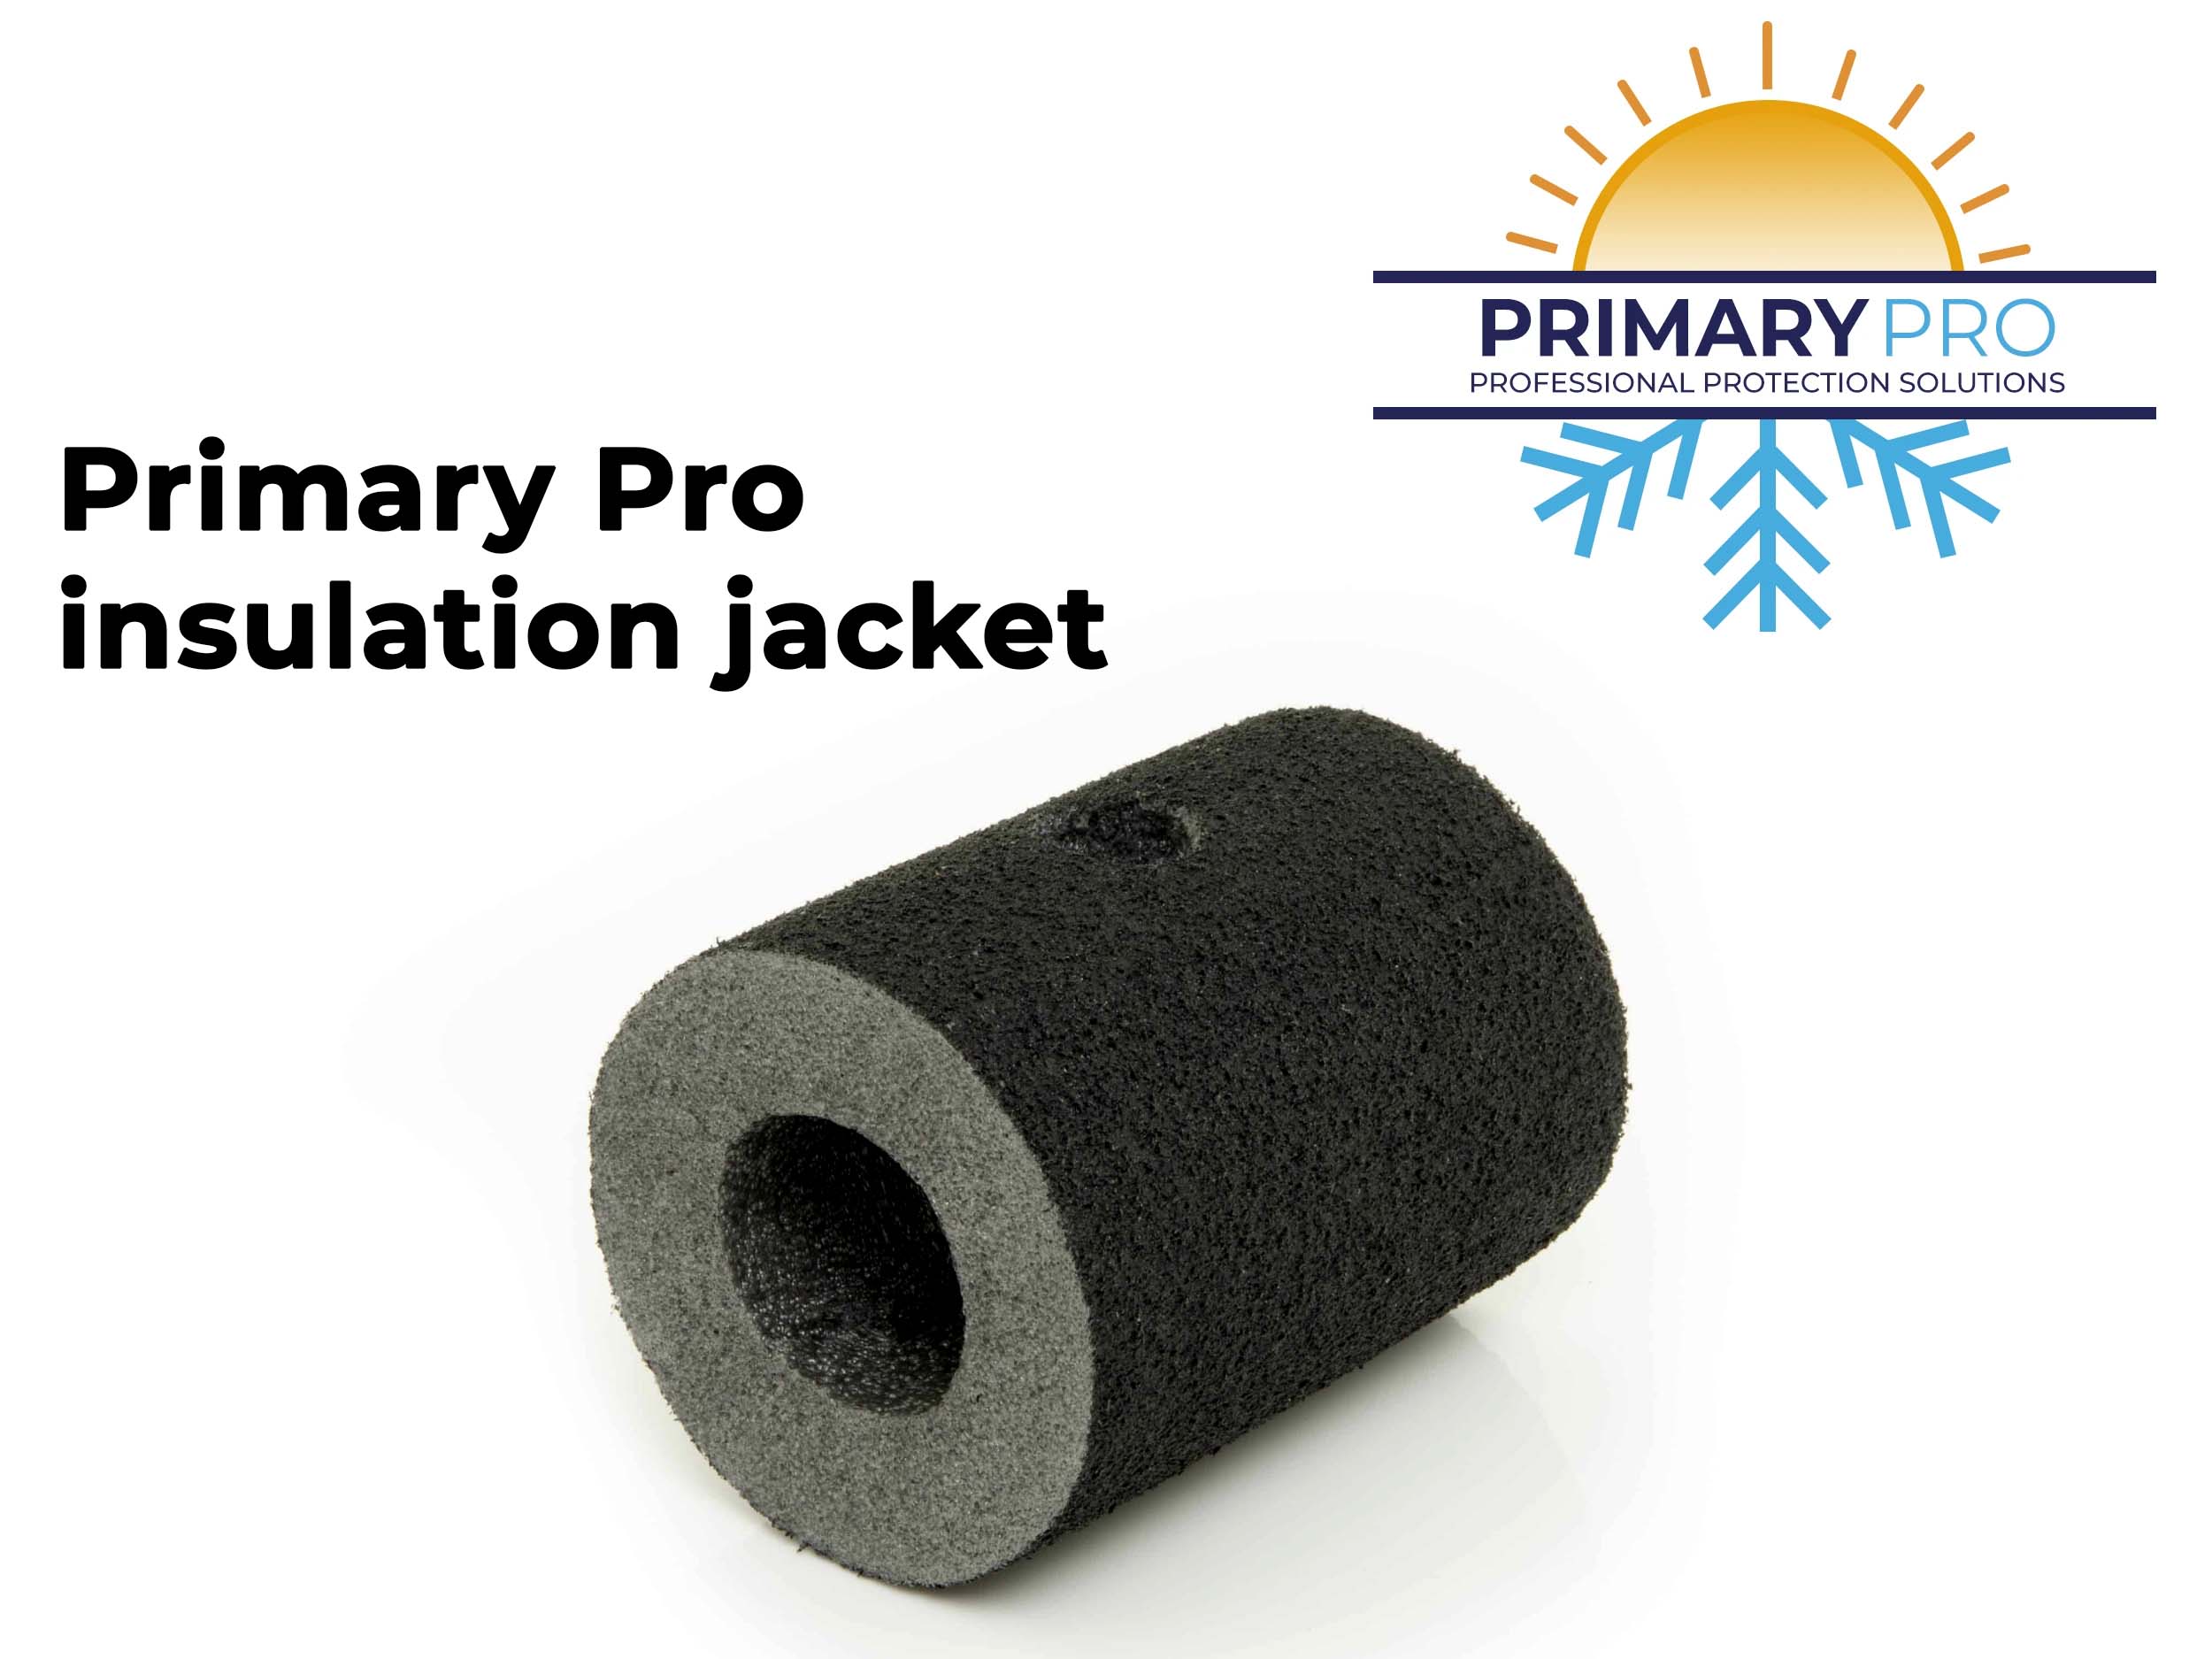 Primary Pro Insulation jacket